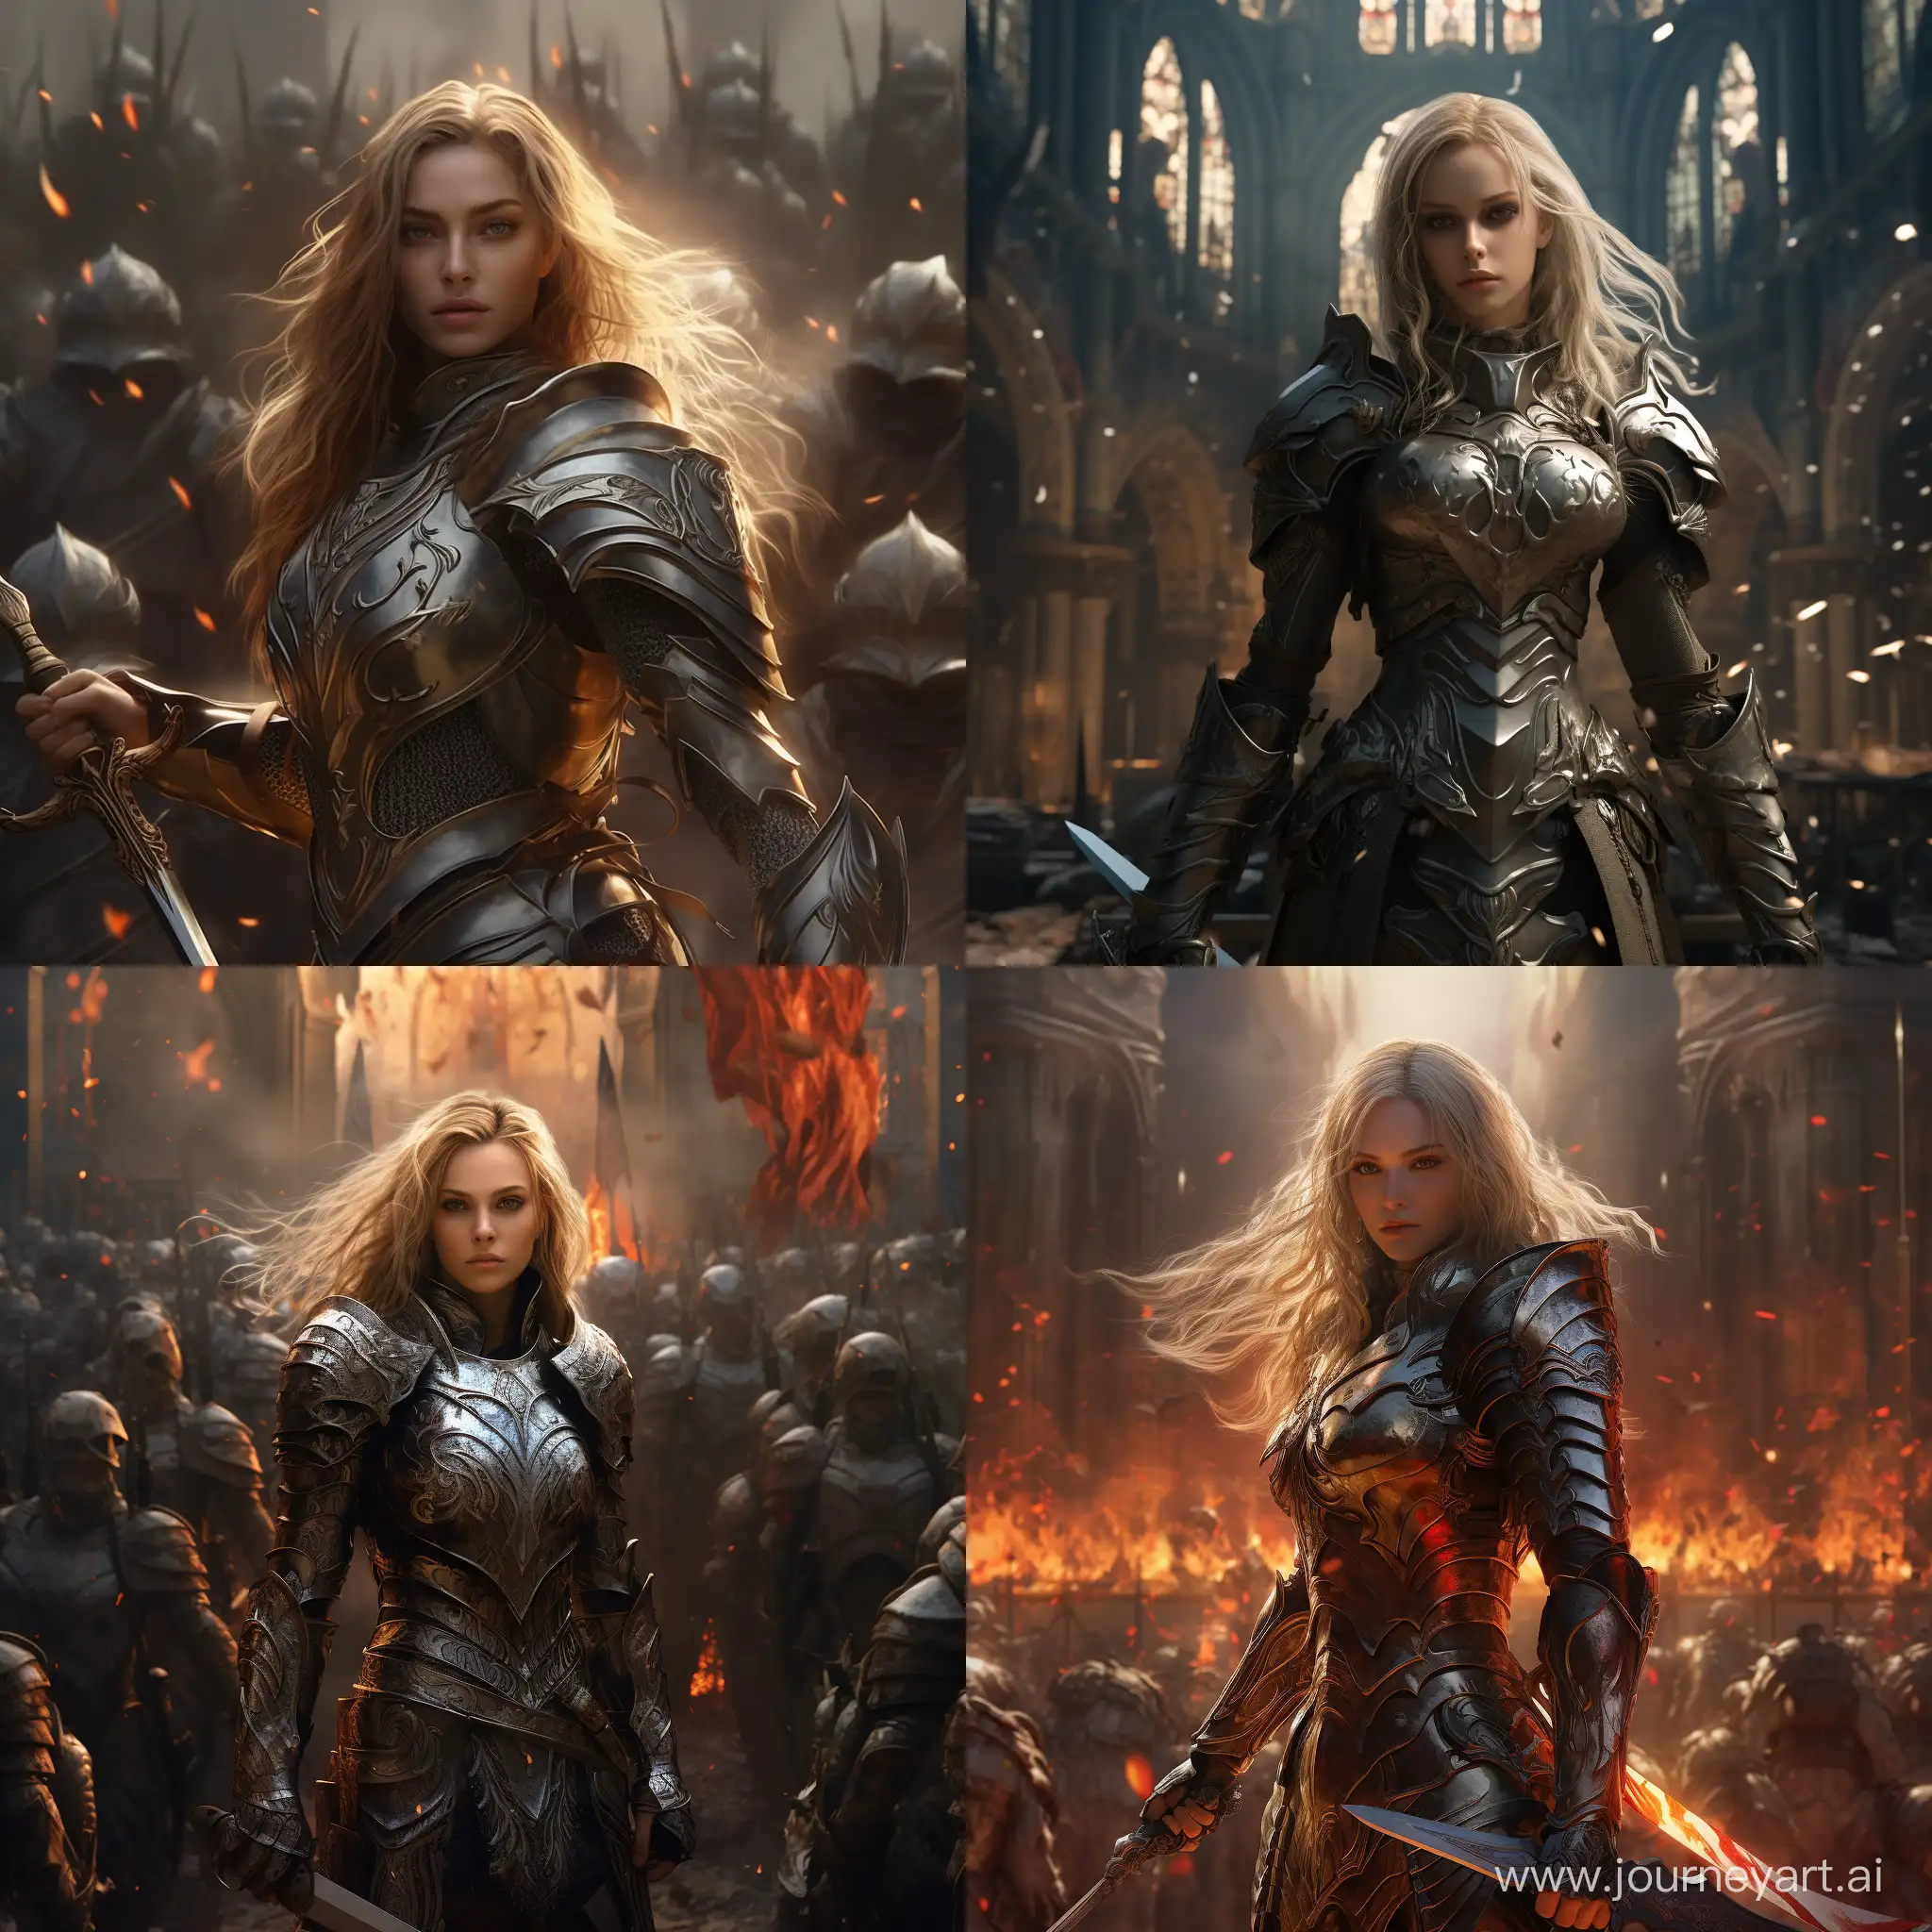 Epic-Battle-Scene-Holy-Female-Knight-in-High-Fantasy